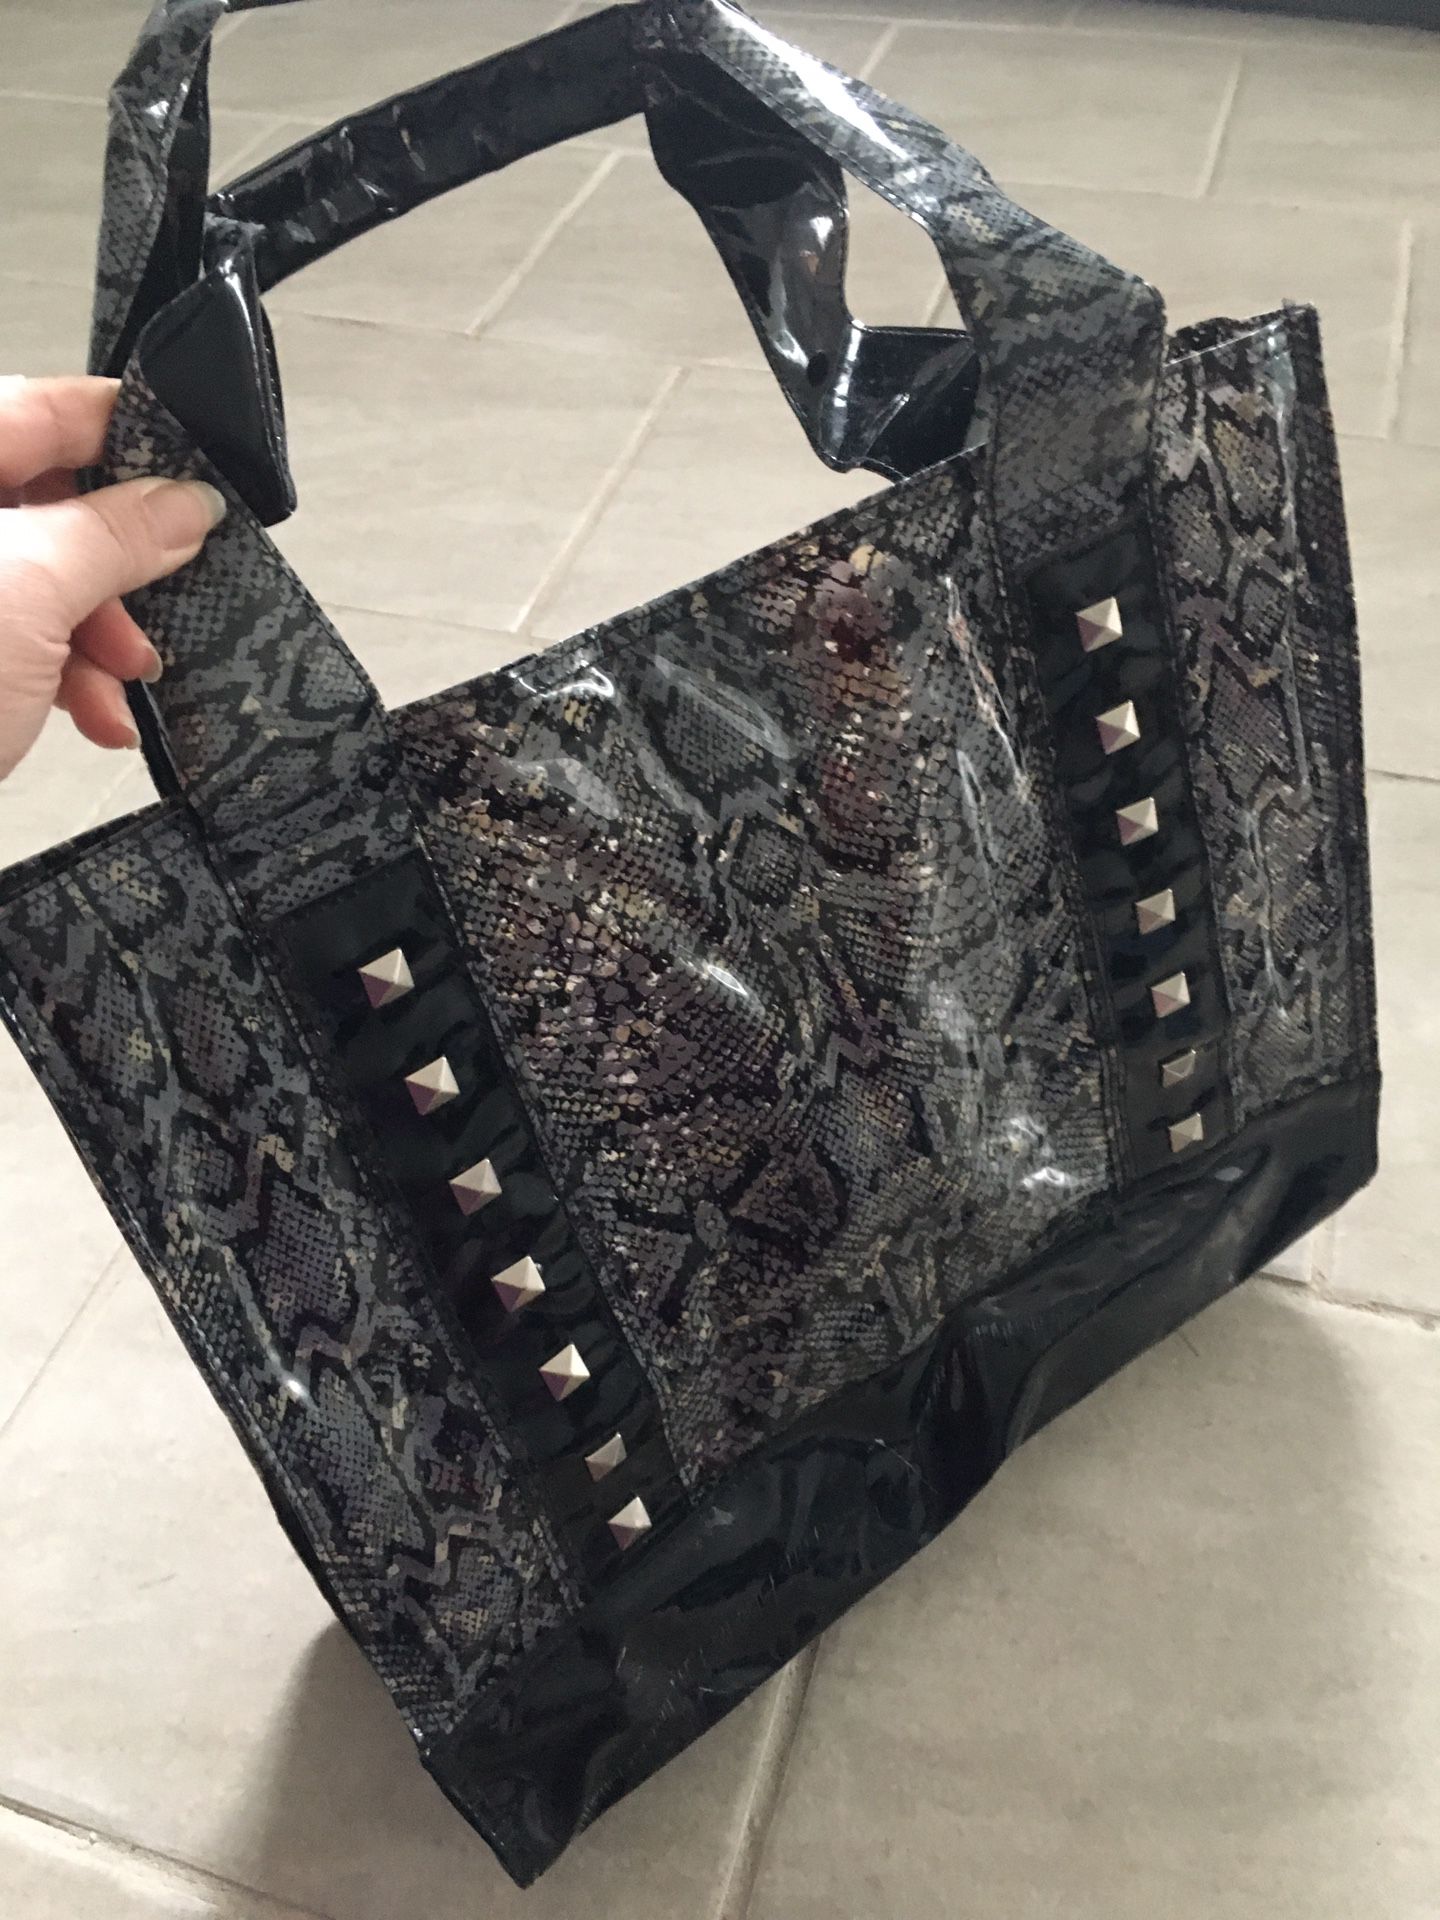 Cute heavy plastic metal studded sturdy handle bag purse